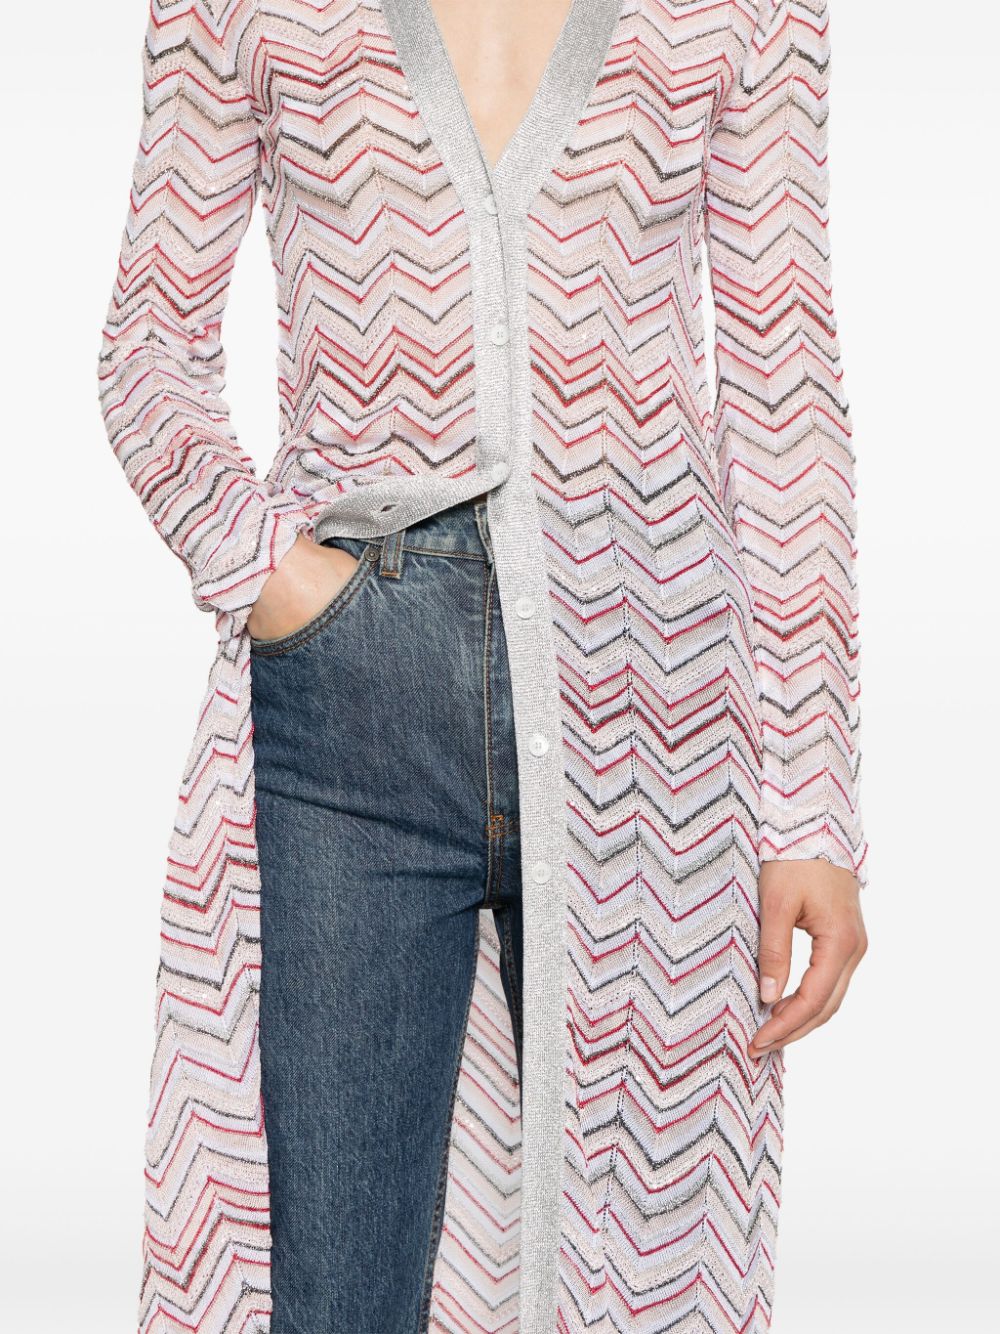 MISSONI Zigzag Pattern Long Cardigan in Light Salmon Pink for Women